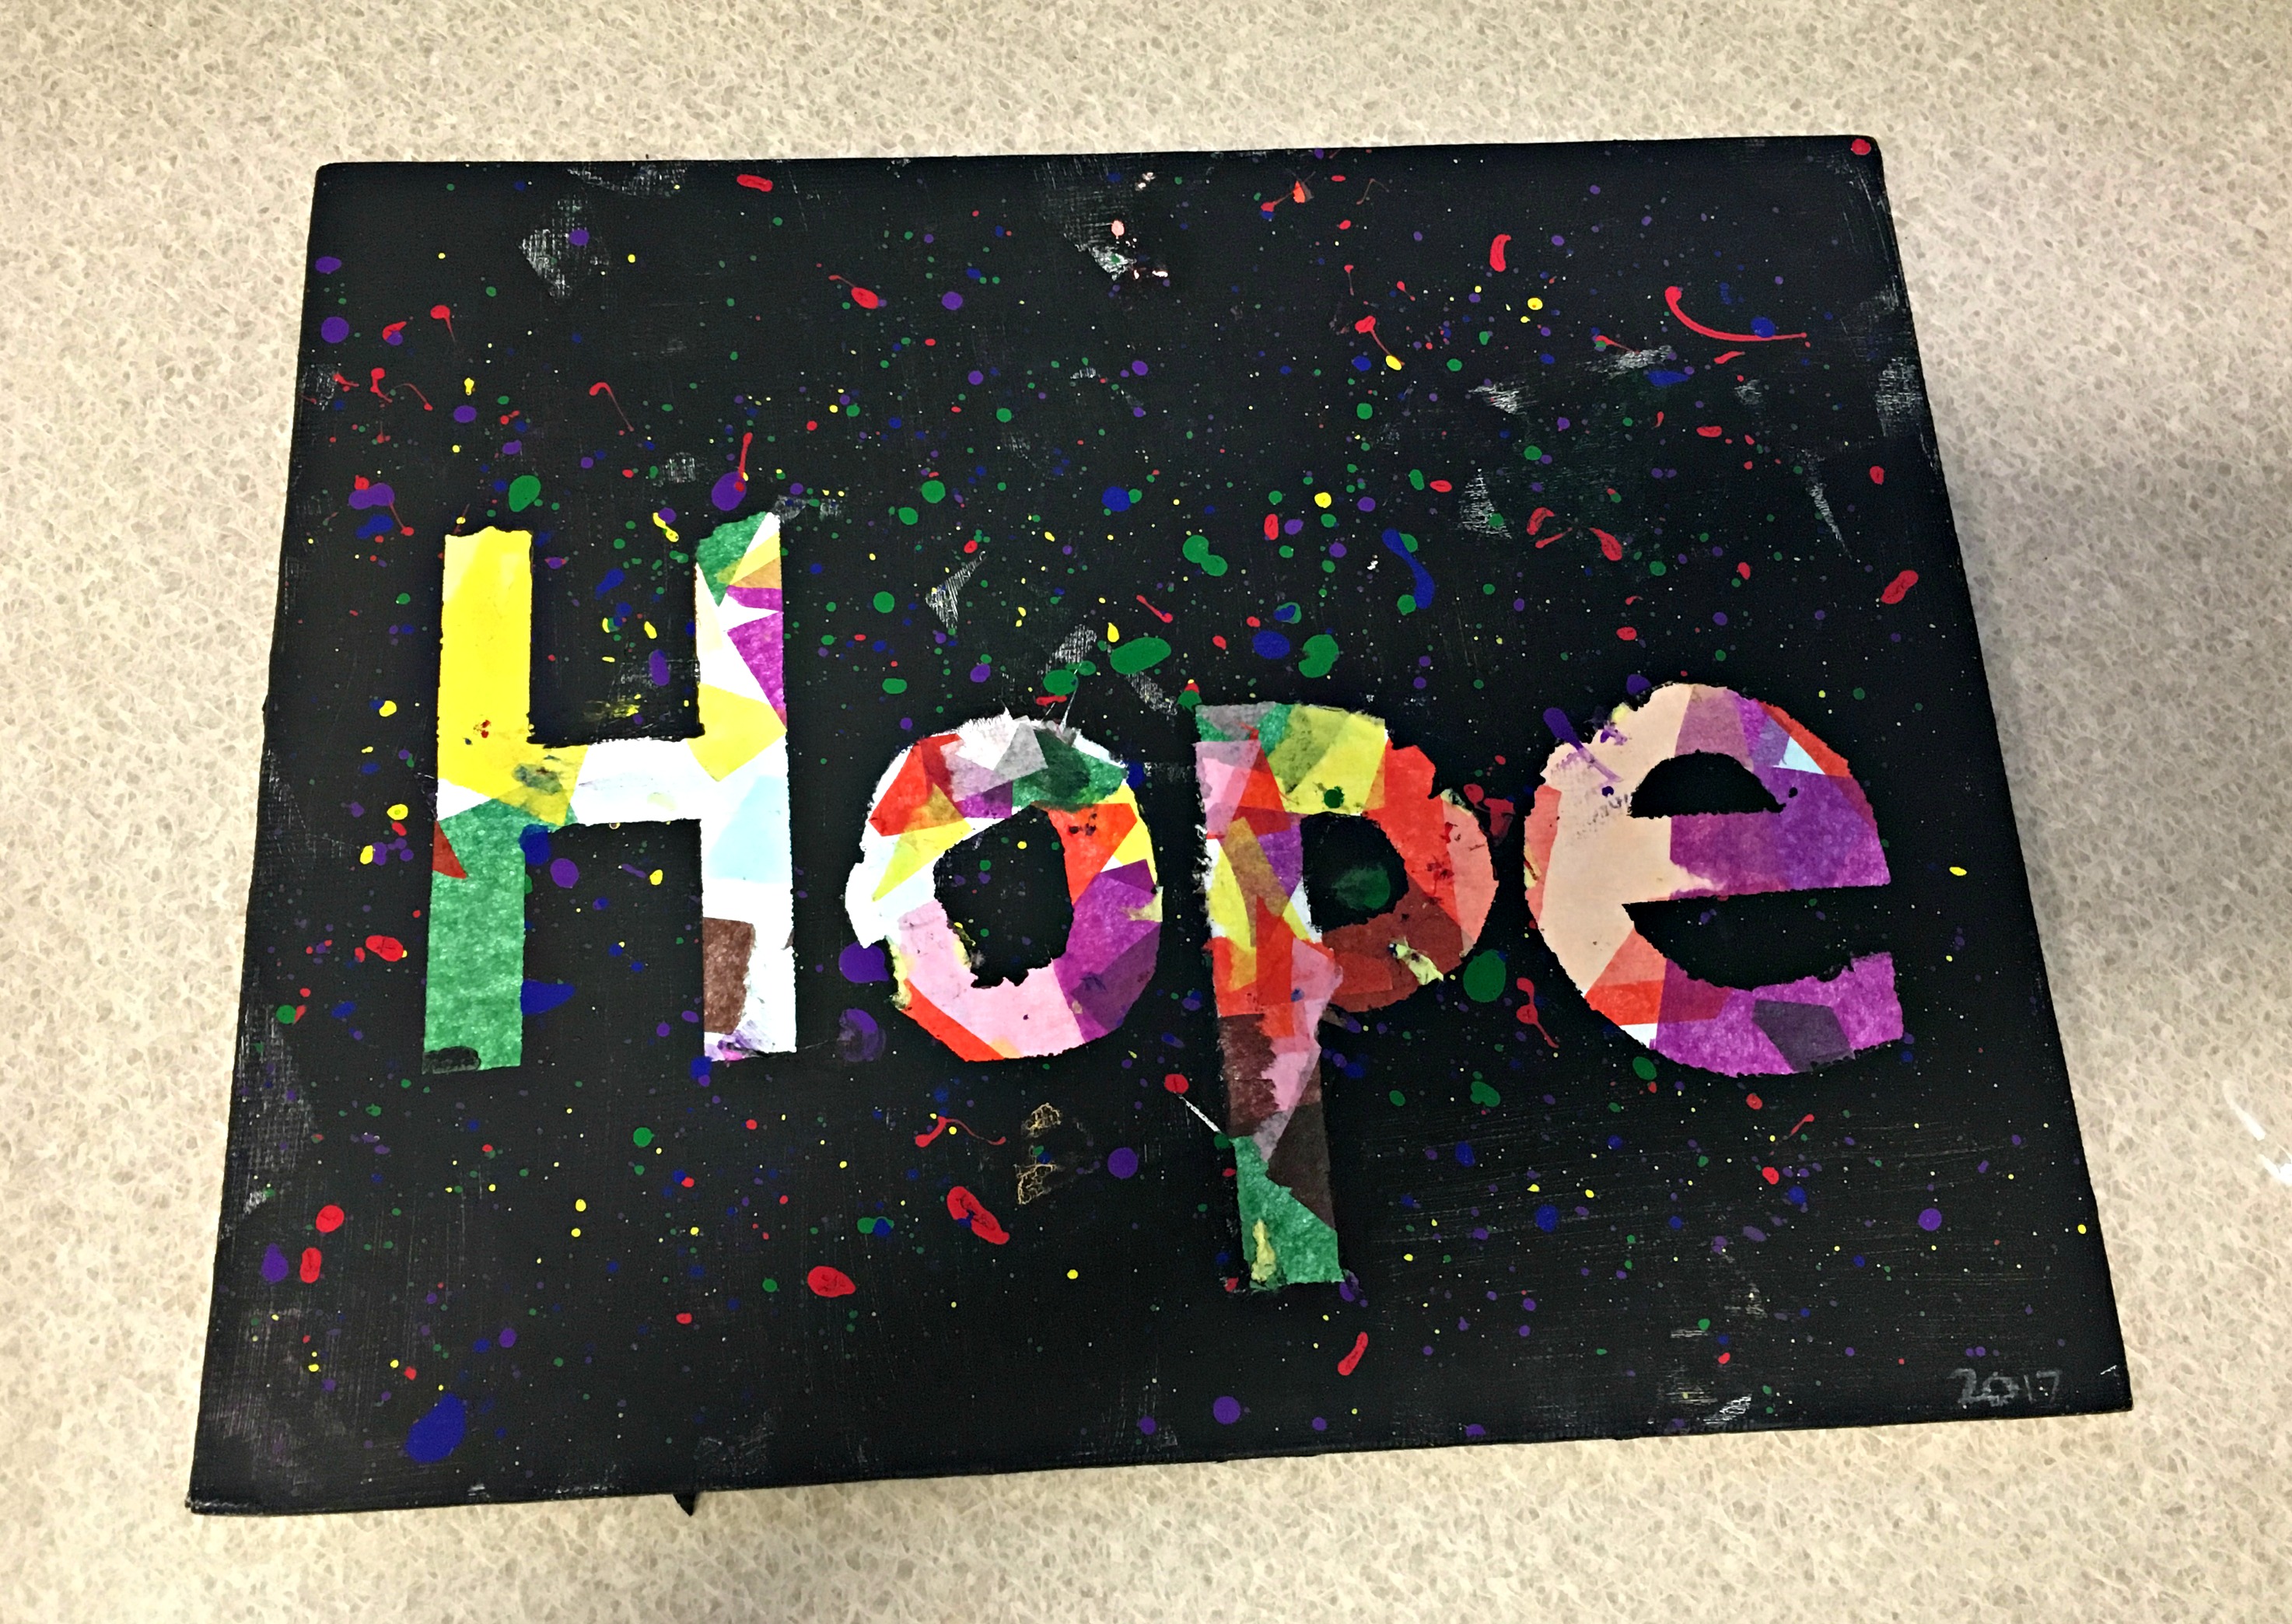 Inpatient Mental Health Artwork - HOPE